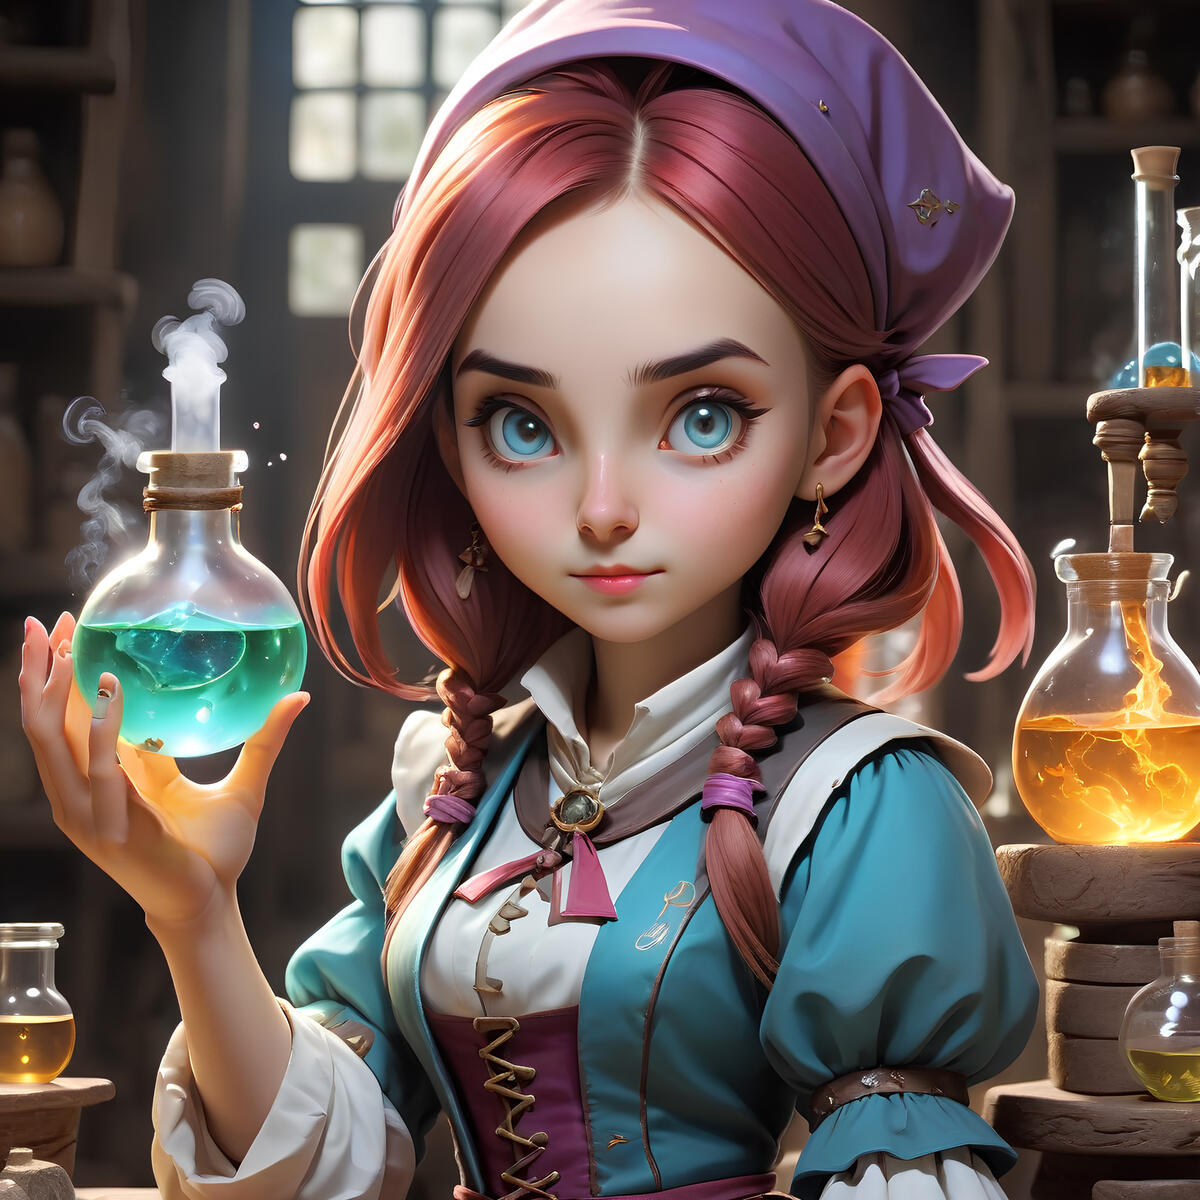 The alchemist girl